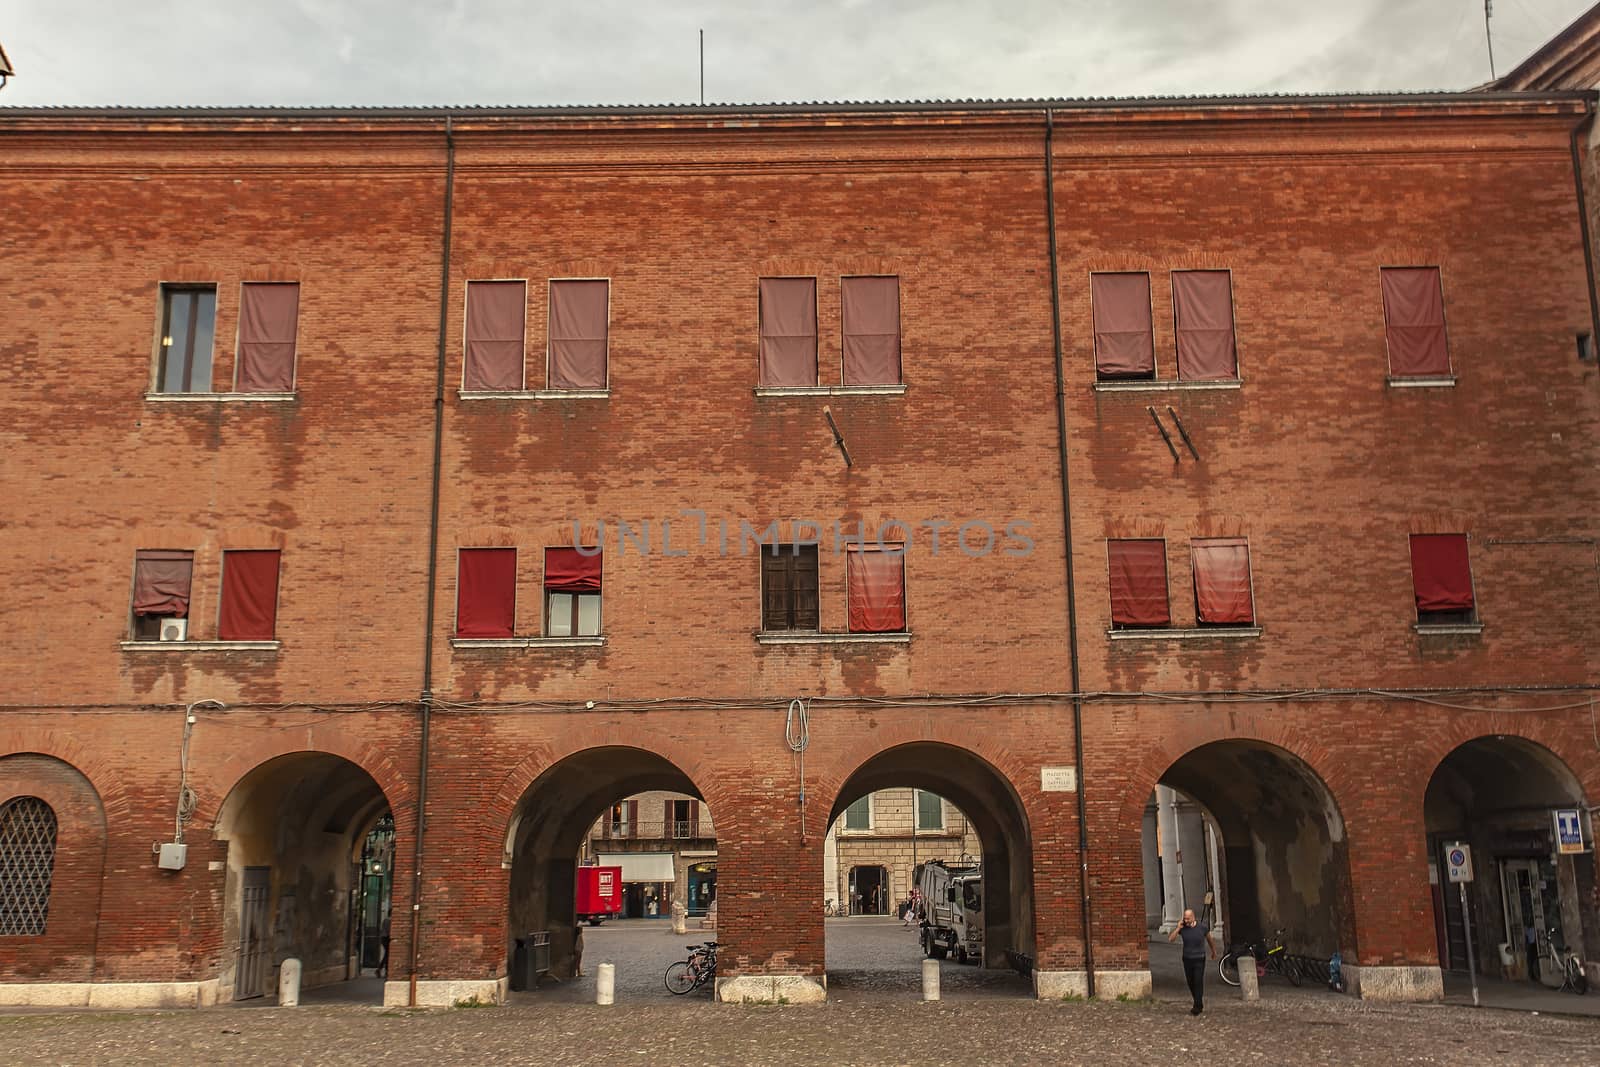 FERRARA, ITALY 29 JULY 2020 : Medieval castle of Ferrara the historical Italian city